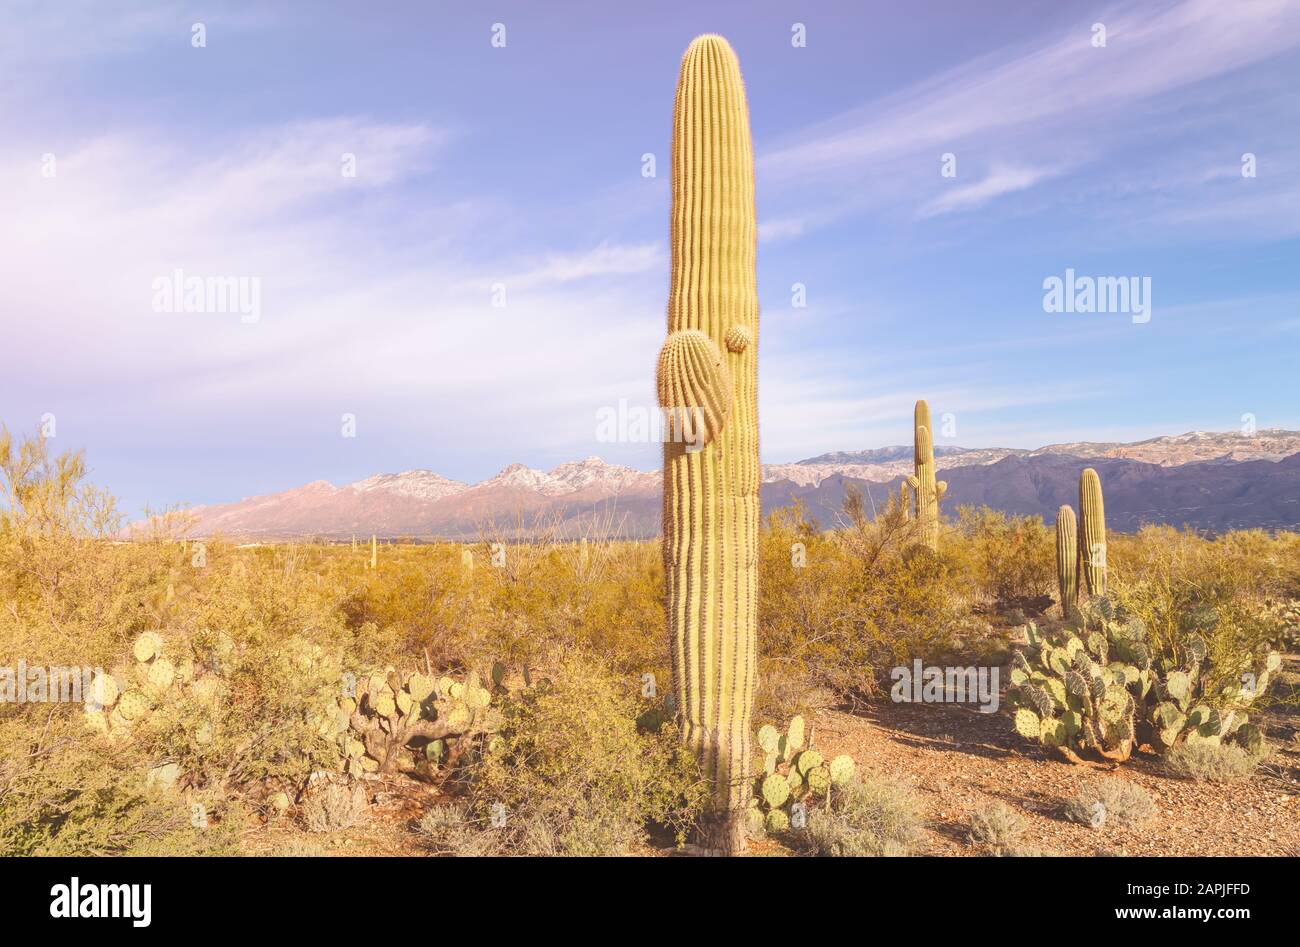 Saguaro cacti (Carnegiea gigantea), and surrounding plants at saguaro forest, Saguaro National Park, Arizona, USA. Stock Photo